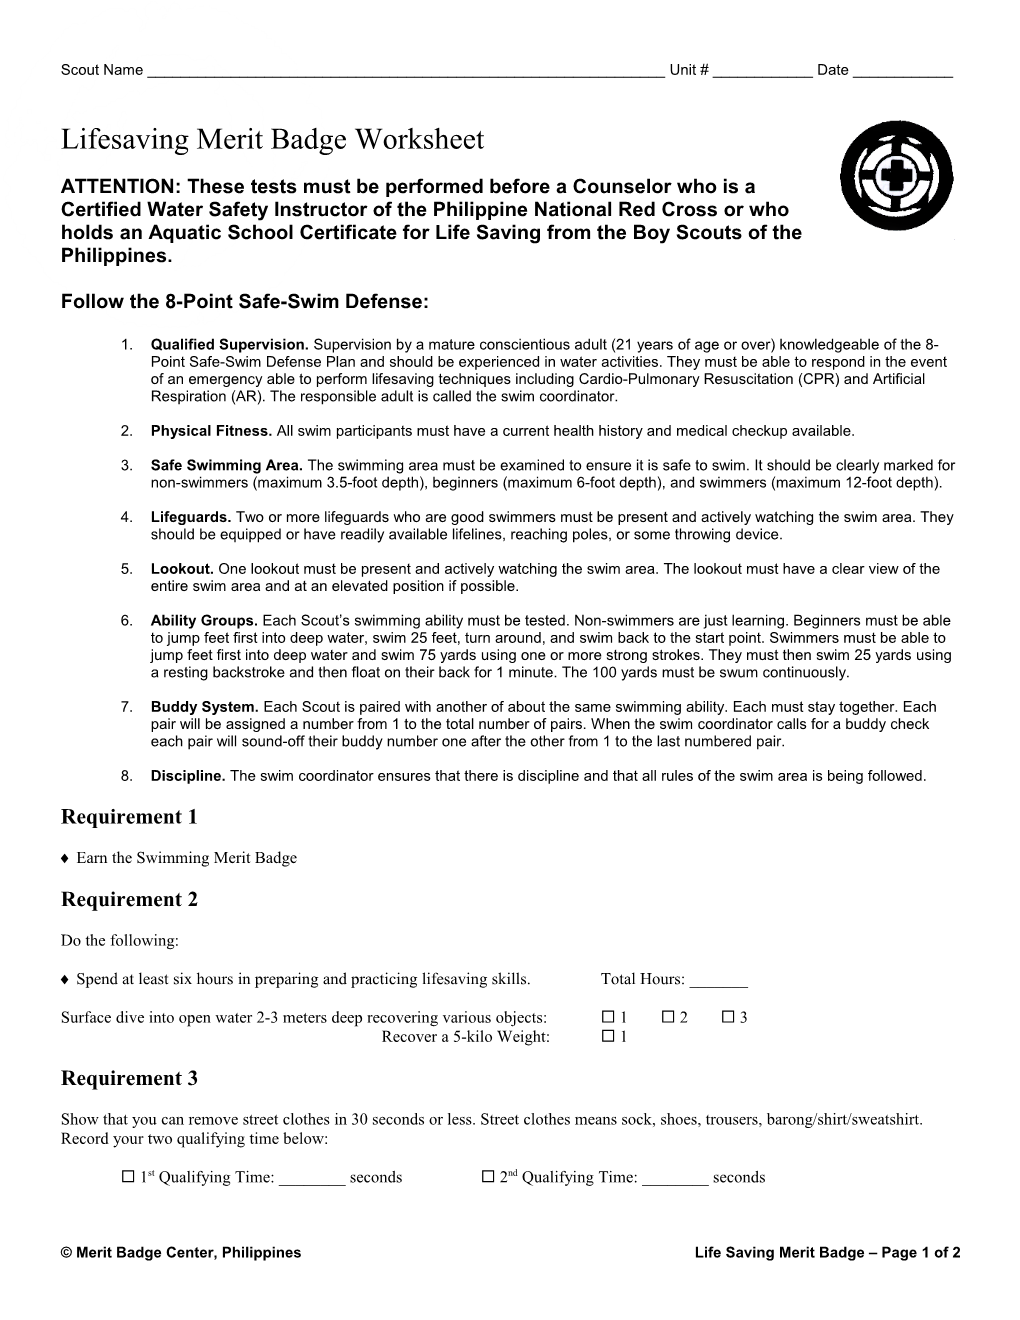 Lifesaving Merit Badge Worksheet